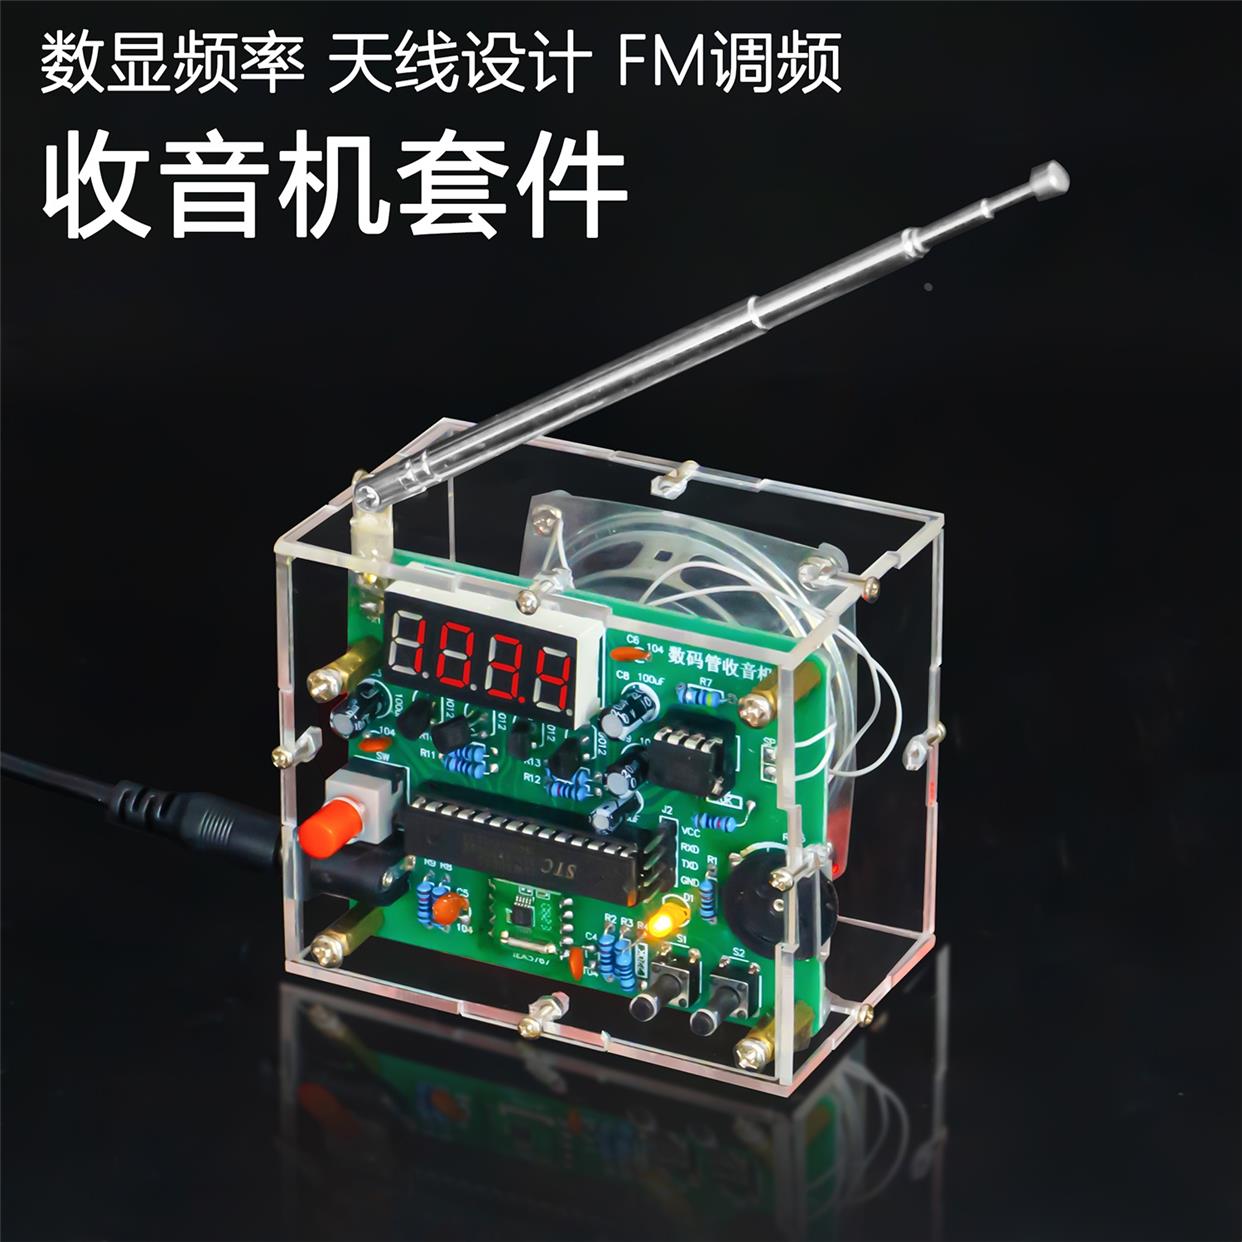 FM调频收音机组装套件DIY数码管显示数字电子制作焊接练习电路板